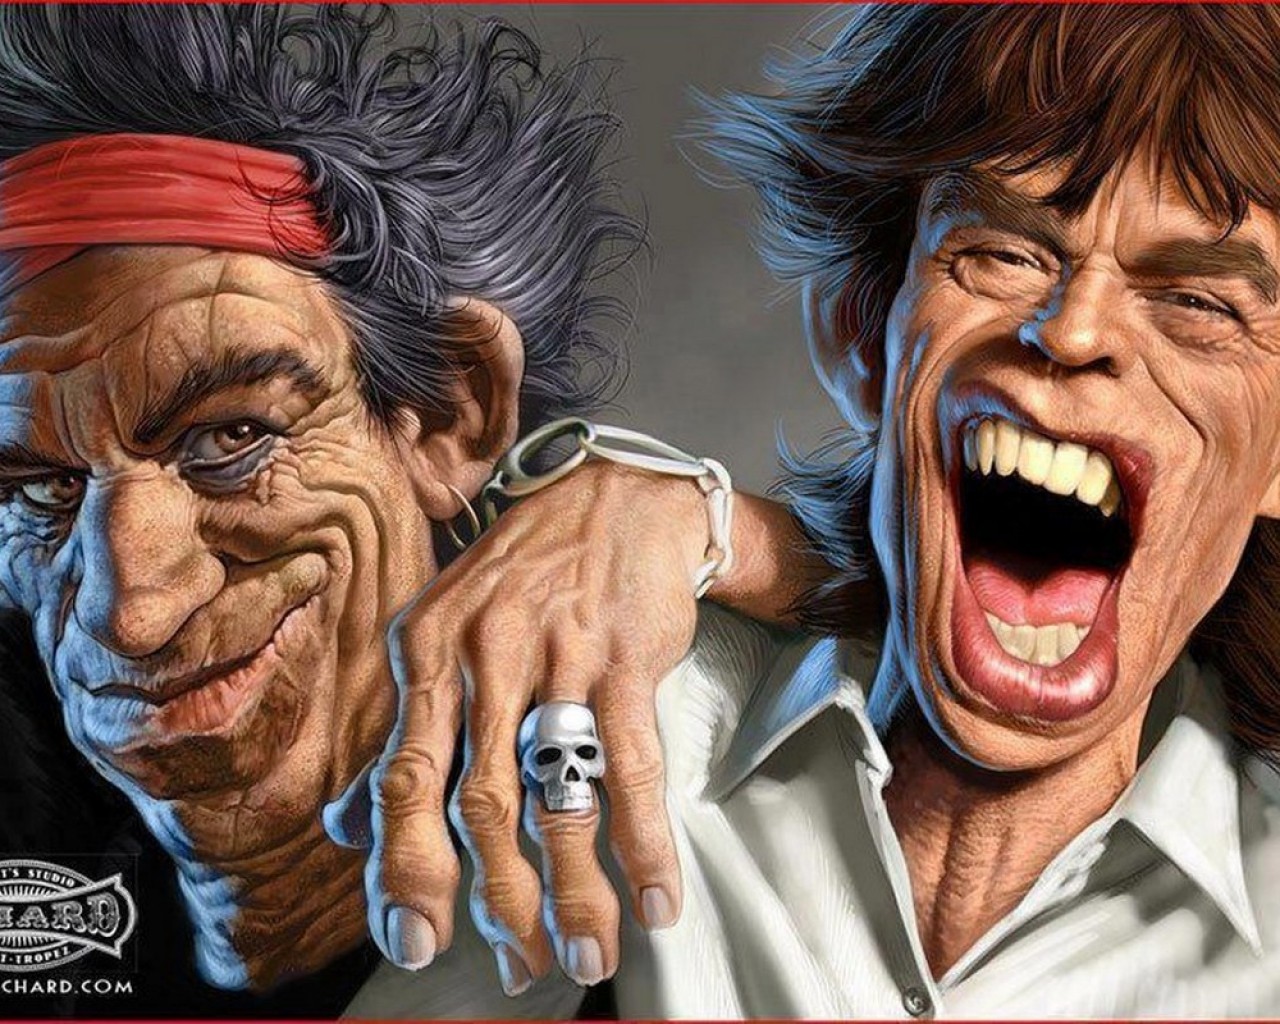 Full HD Rolling Stones Wallpaper Music Rock Mick Jagger Keith Richards